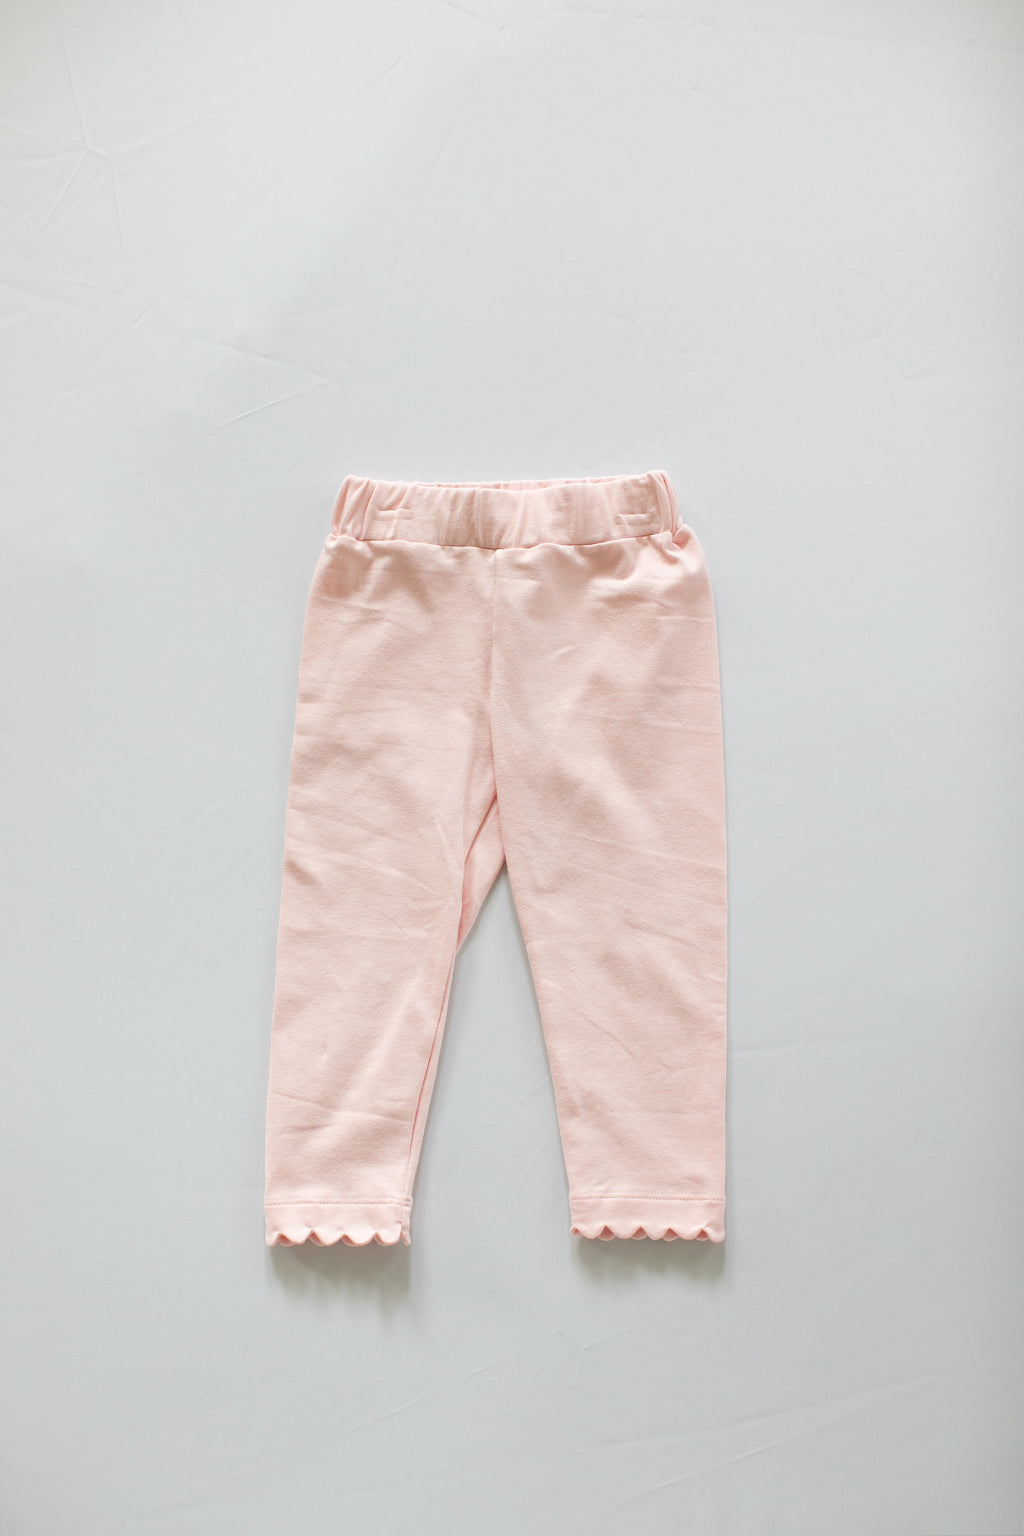 6148 scallop legging - solid baby pink pima